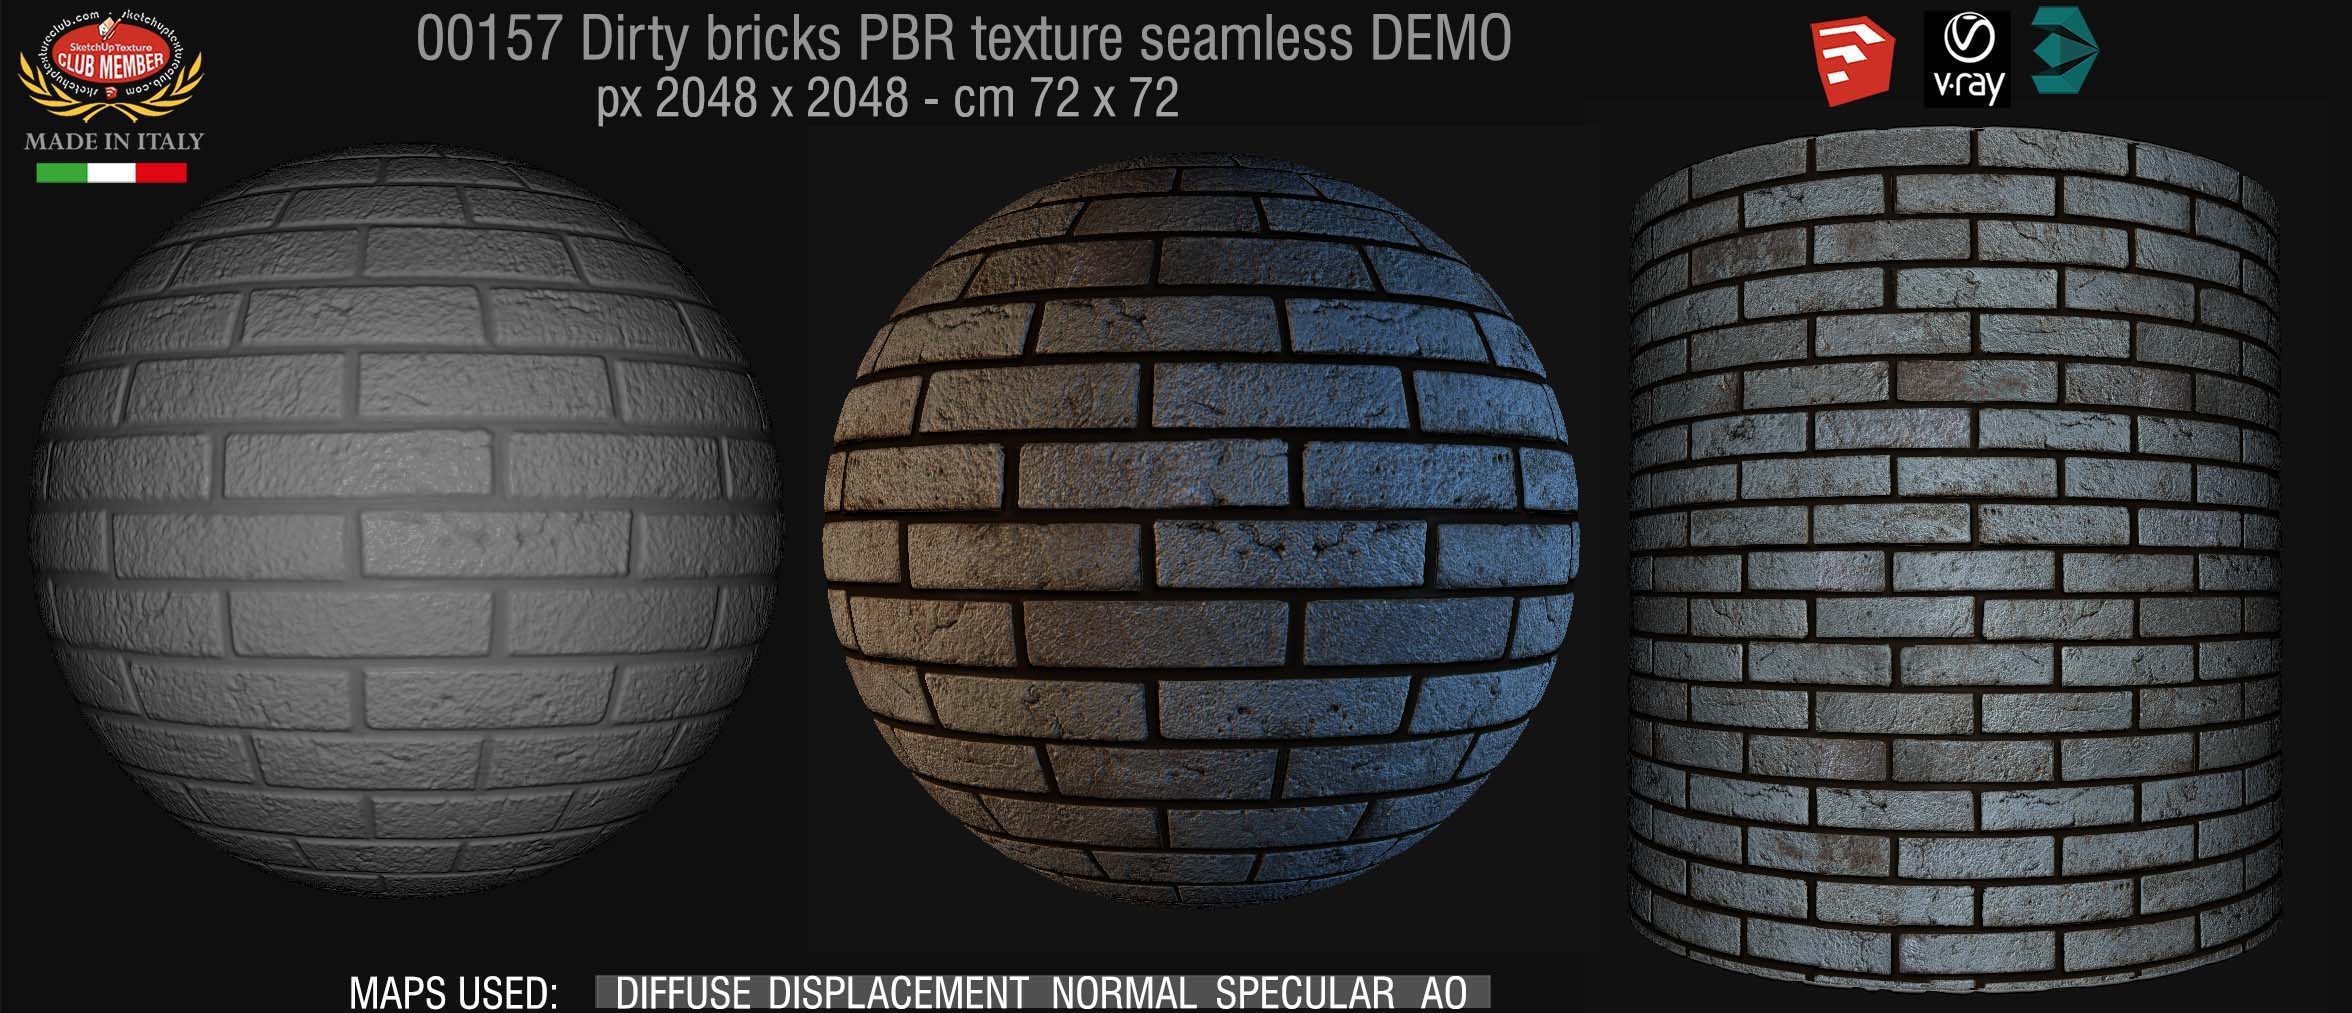 00157 Dirty bricks PBR texture seamless DEMO